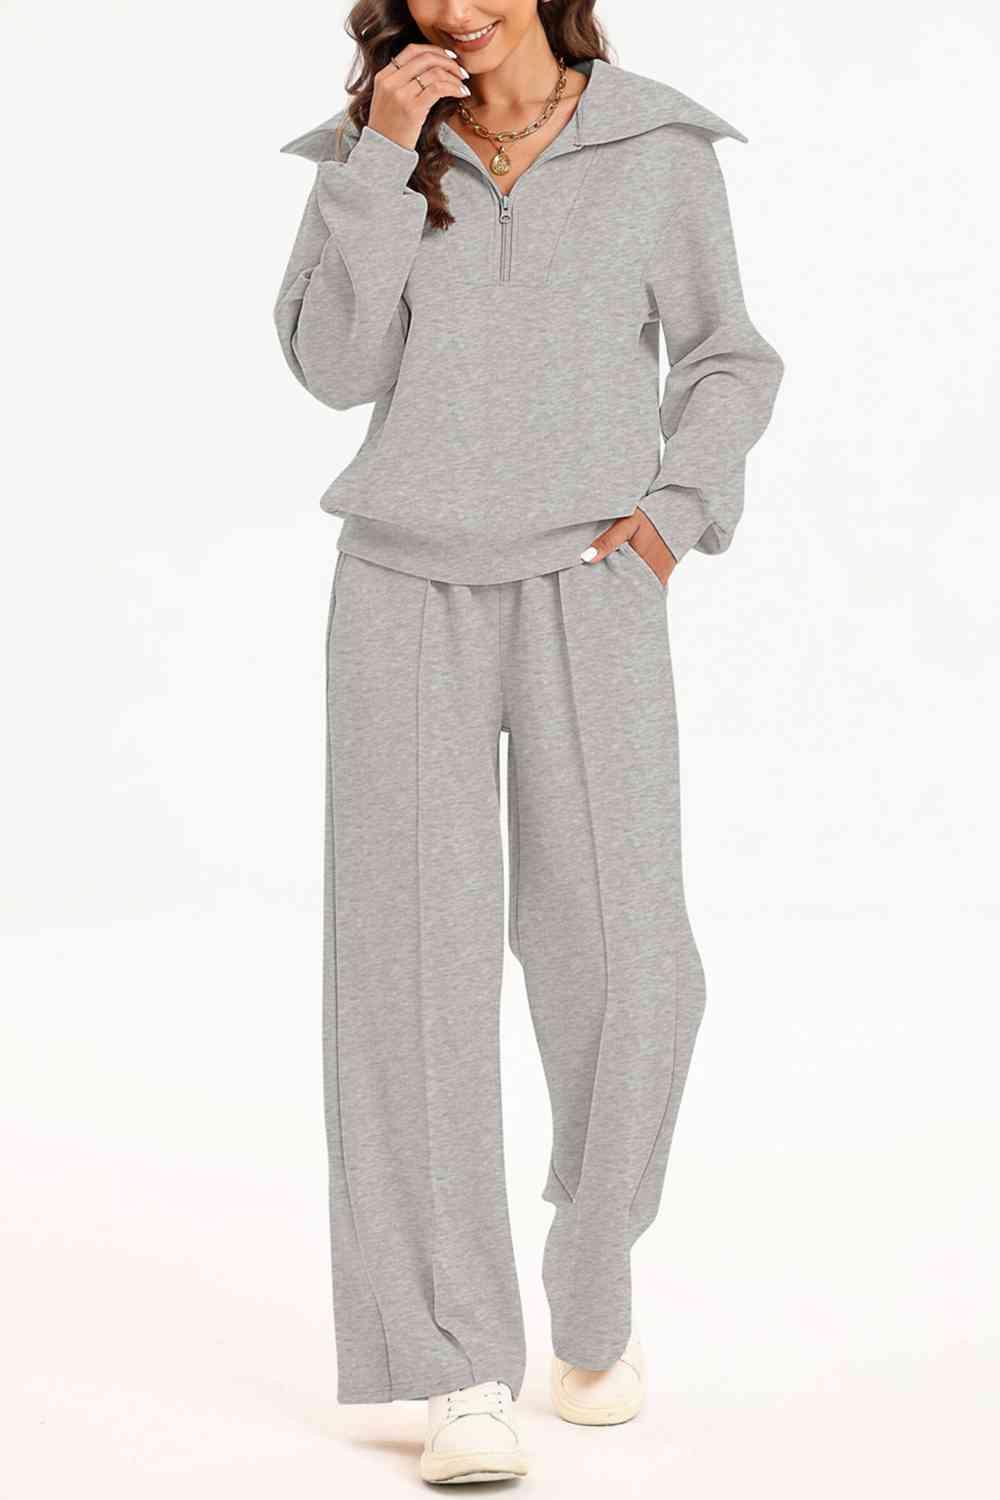 Bona Fide Fashion - Half Zip Collared Neck Sweatshirt and Pants Set - Women Fashion - Bona Fide Fashion